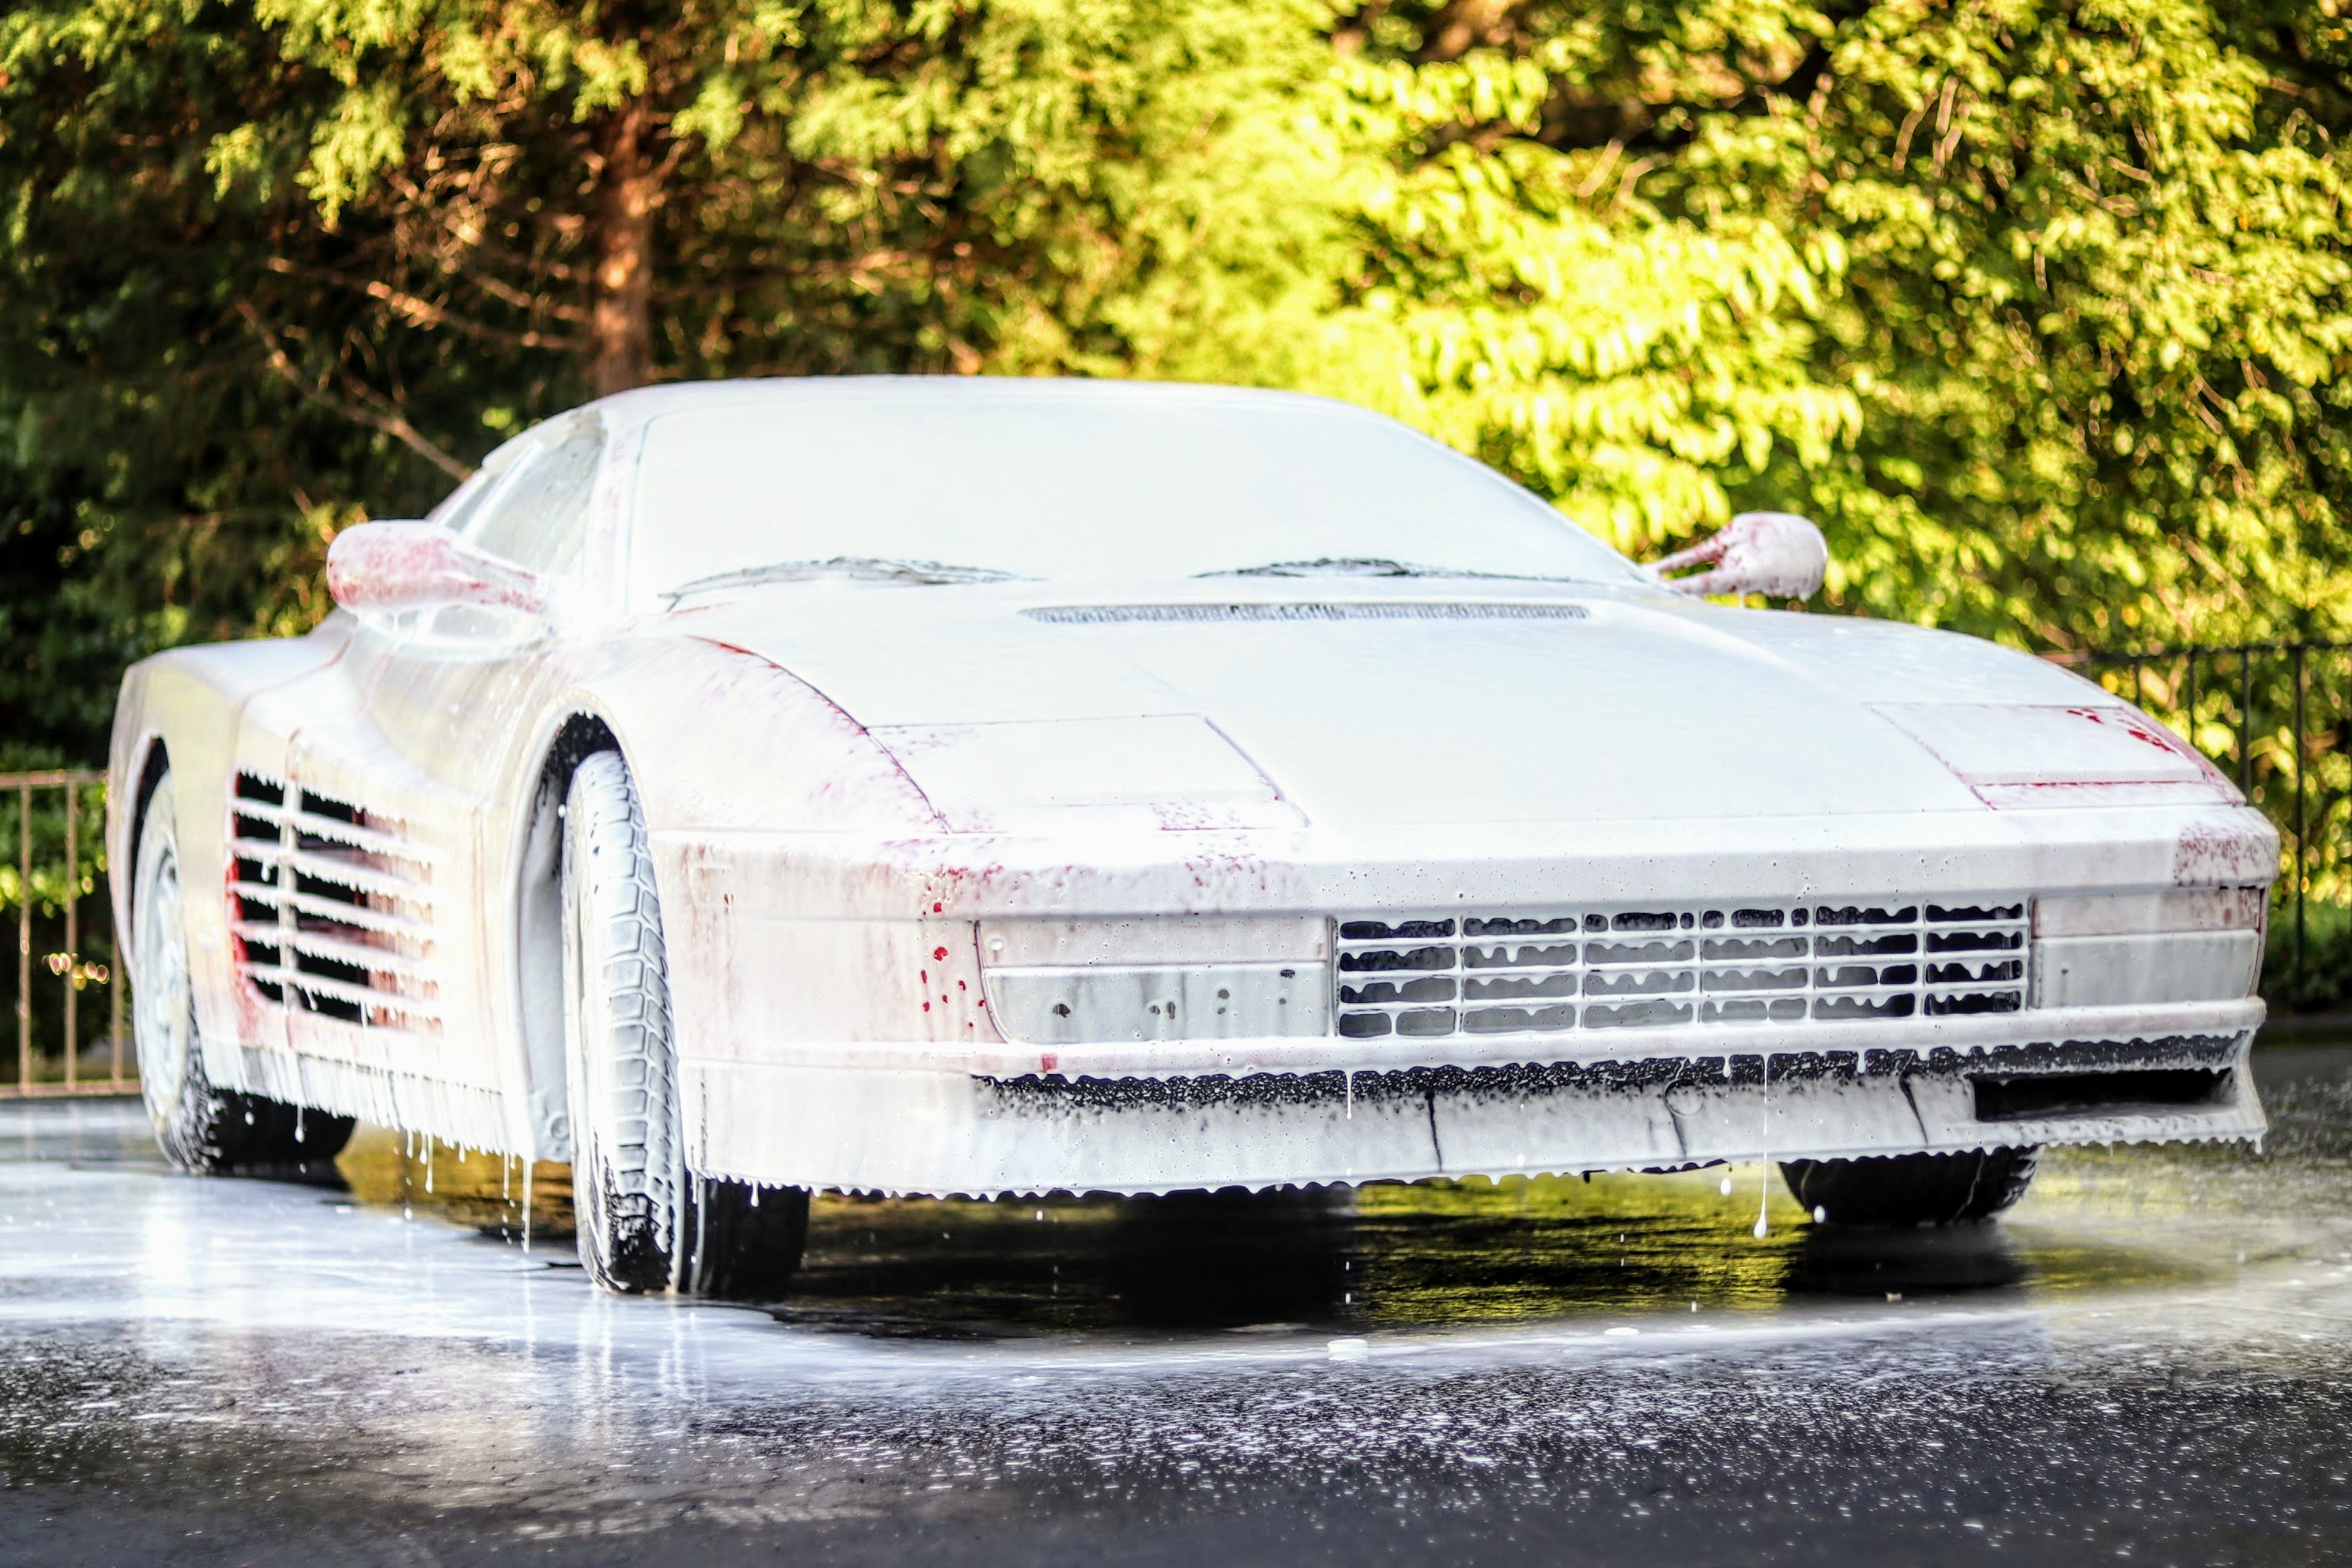 Ferrari Testarossa completely covered with foam